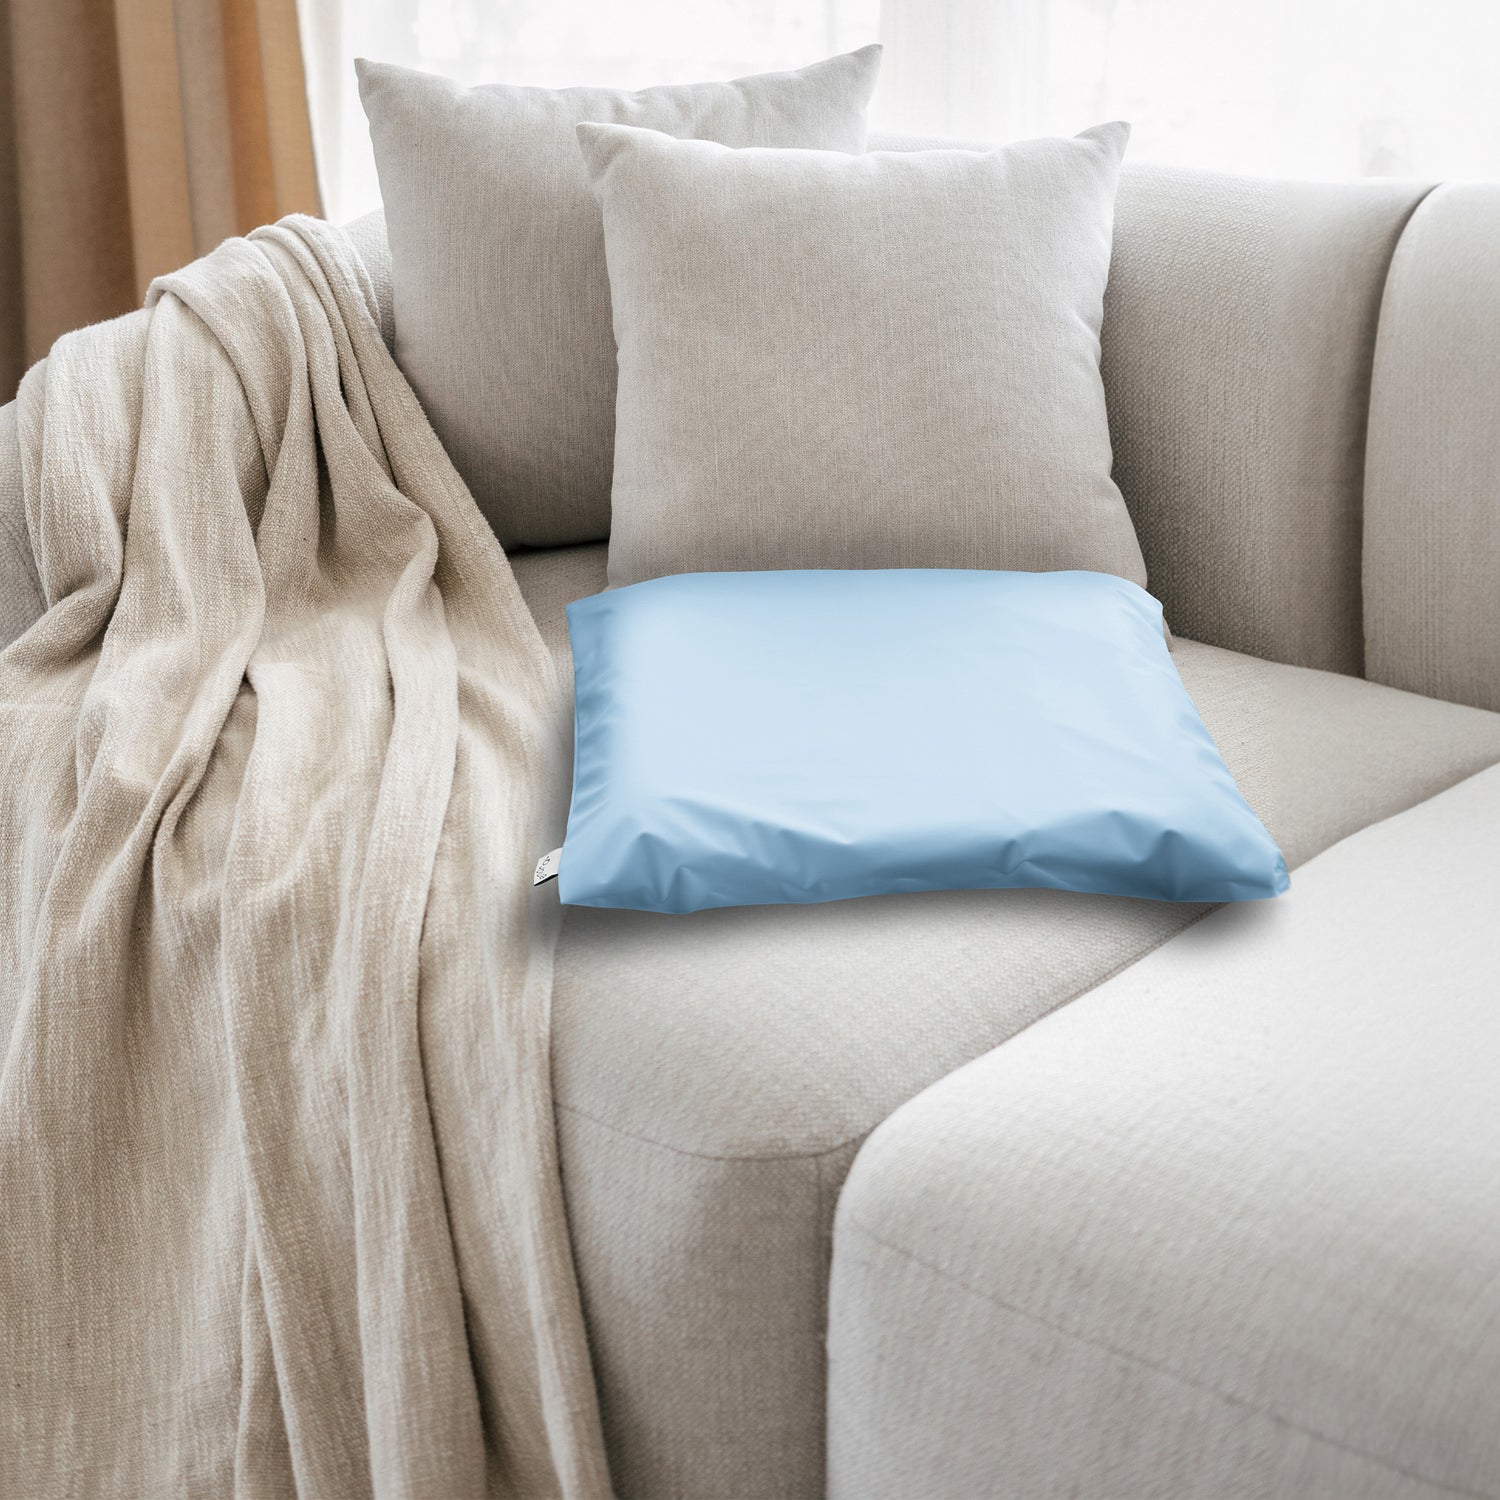 How to Clean your Air Cushion